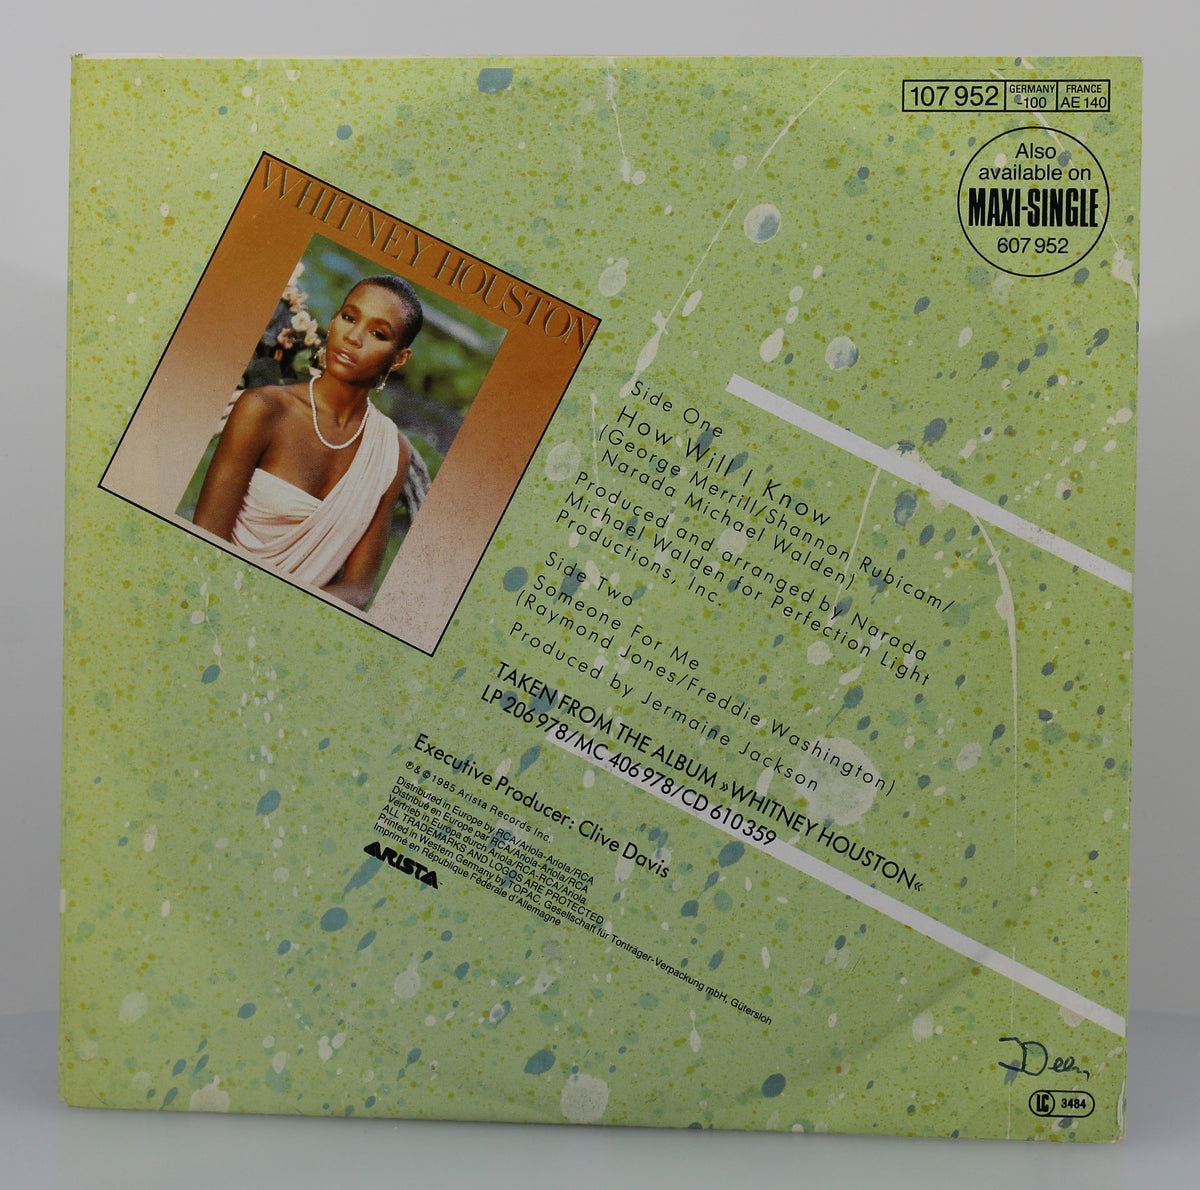 Whitney Houston ‎– How Will I Know, Vinyl, 7&quot;, 45 RPM, Single, Repress, Europe 1986